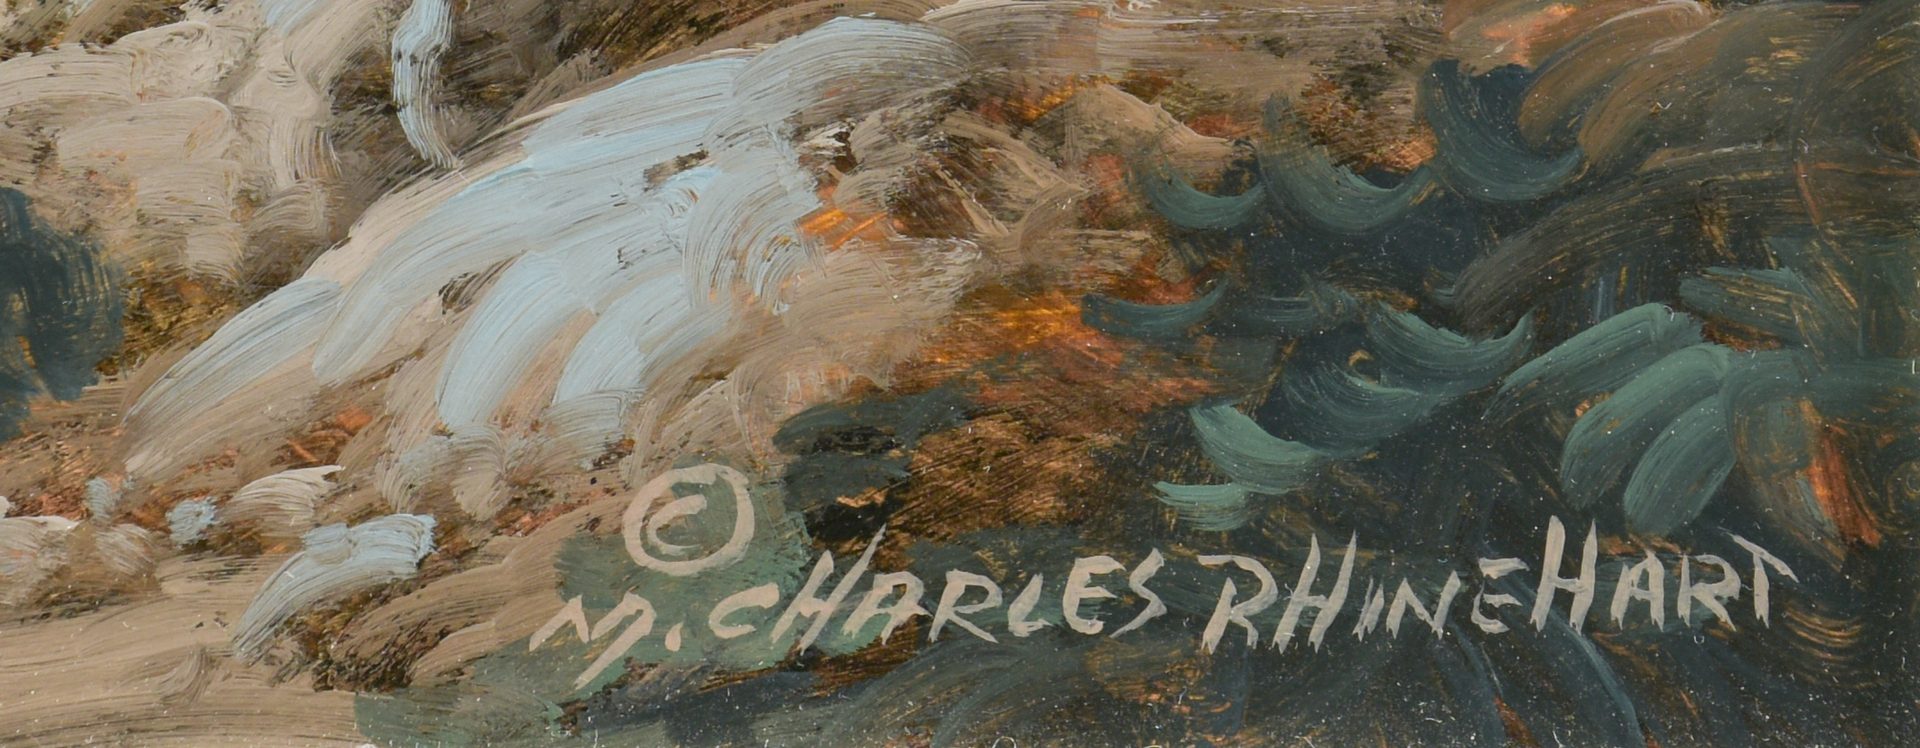 Lot 167: Charles Rhinehart Oil on Board Landscape